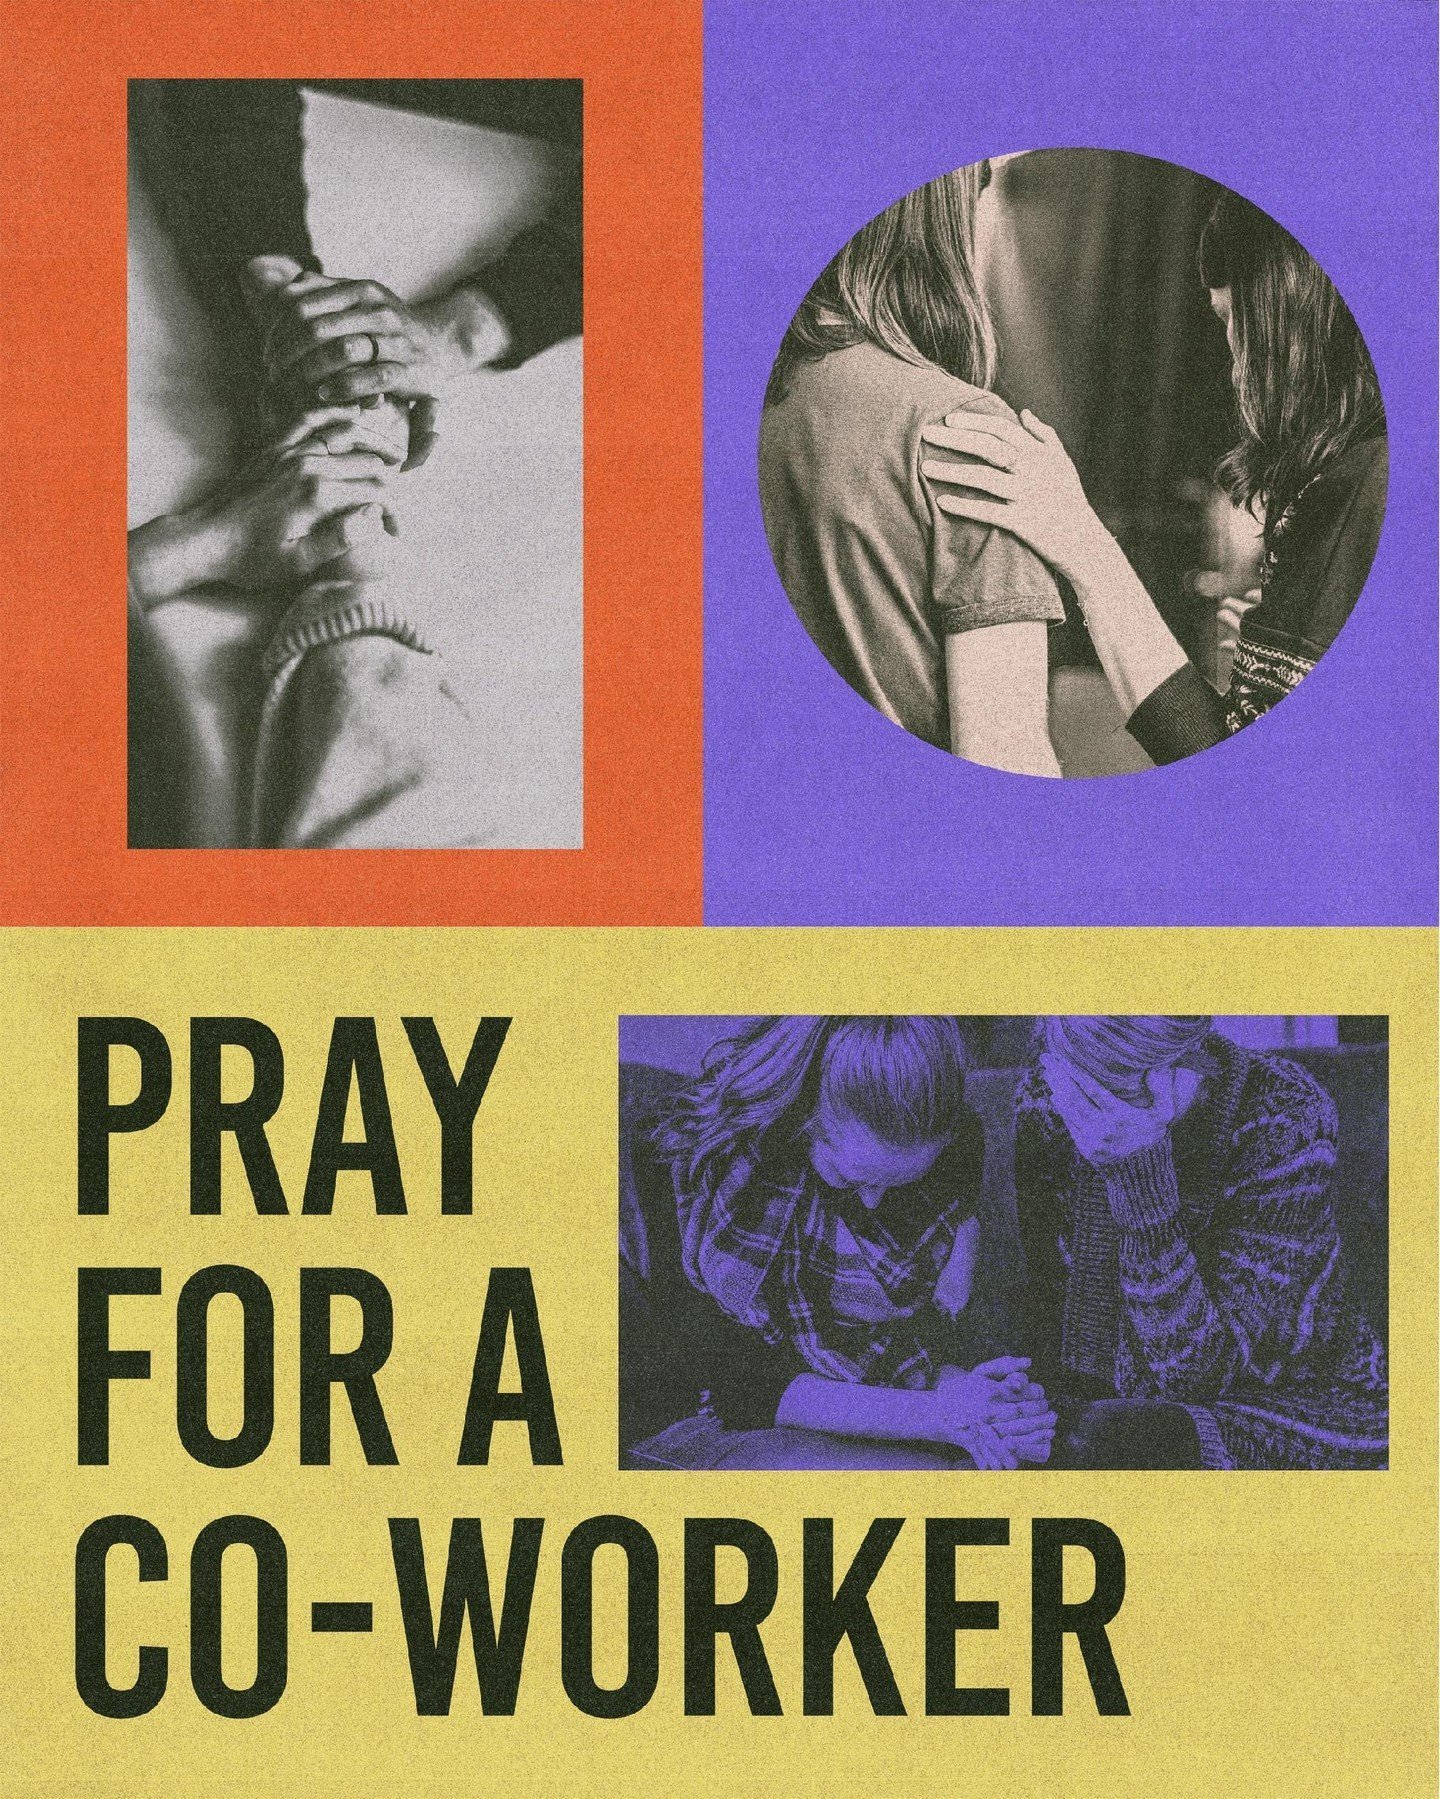 Pray for a co-worker today!
.
.
.
#church #god #morning #jesus #christ #love #christian #pray #prayer #coworker